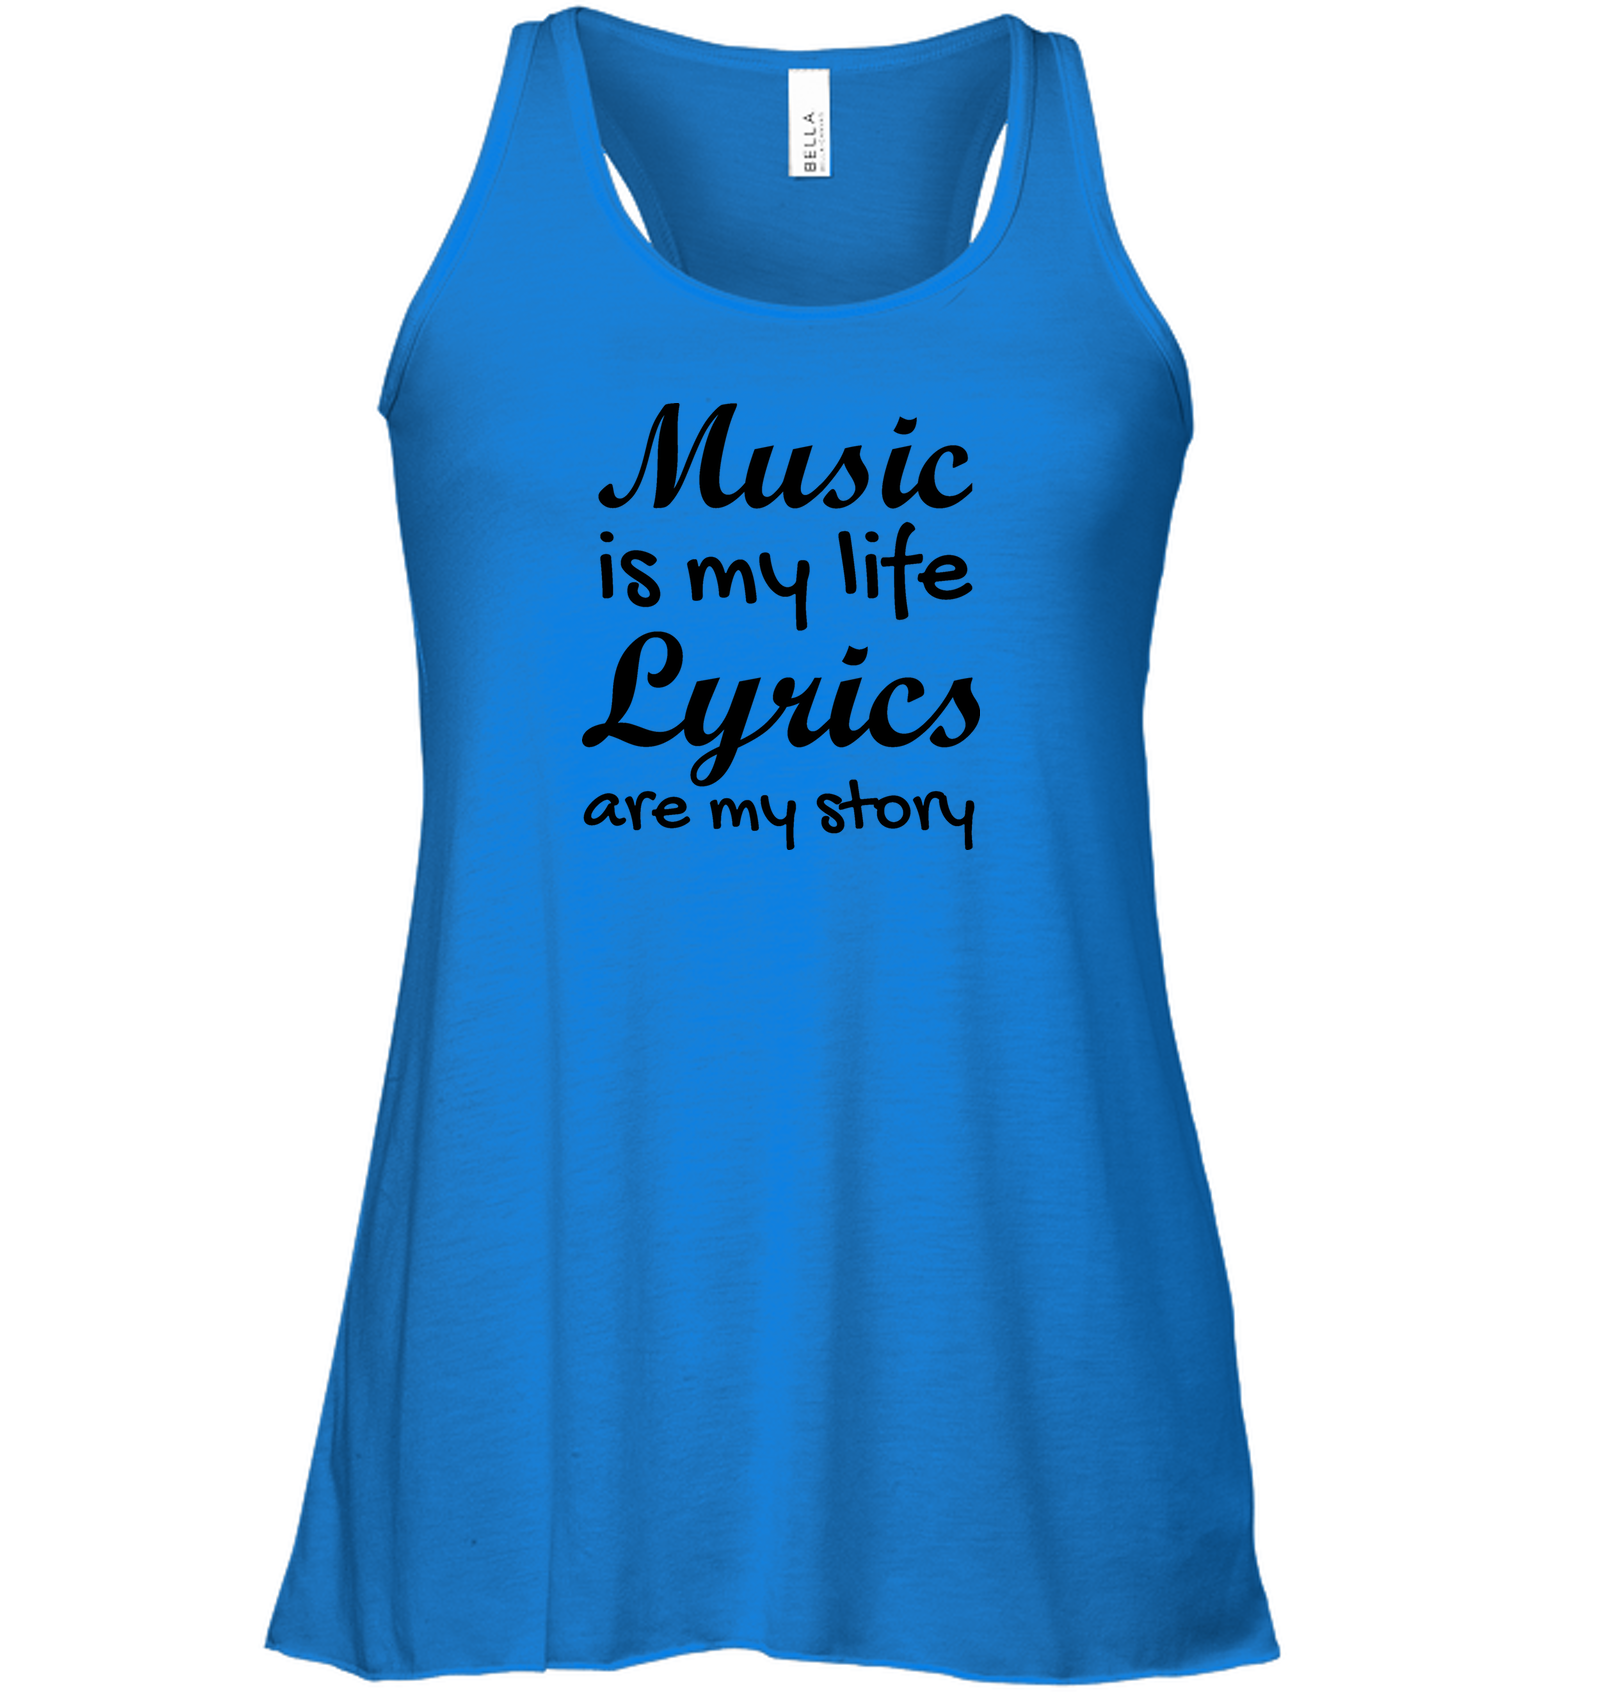 Music is my life Lyrics are my story - Bella + Canvas Women's Flowy Racerback Tank